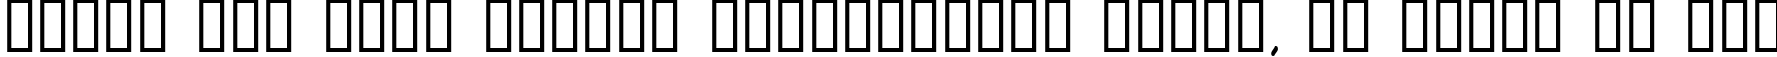 Пример написания шрифтом SF Scribbled Sans Bold текста на русском